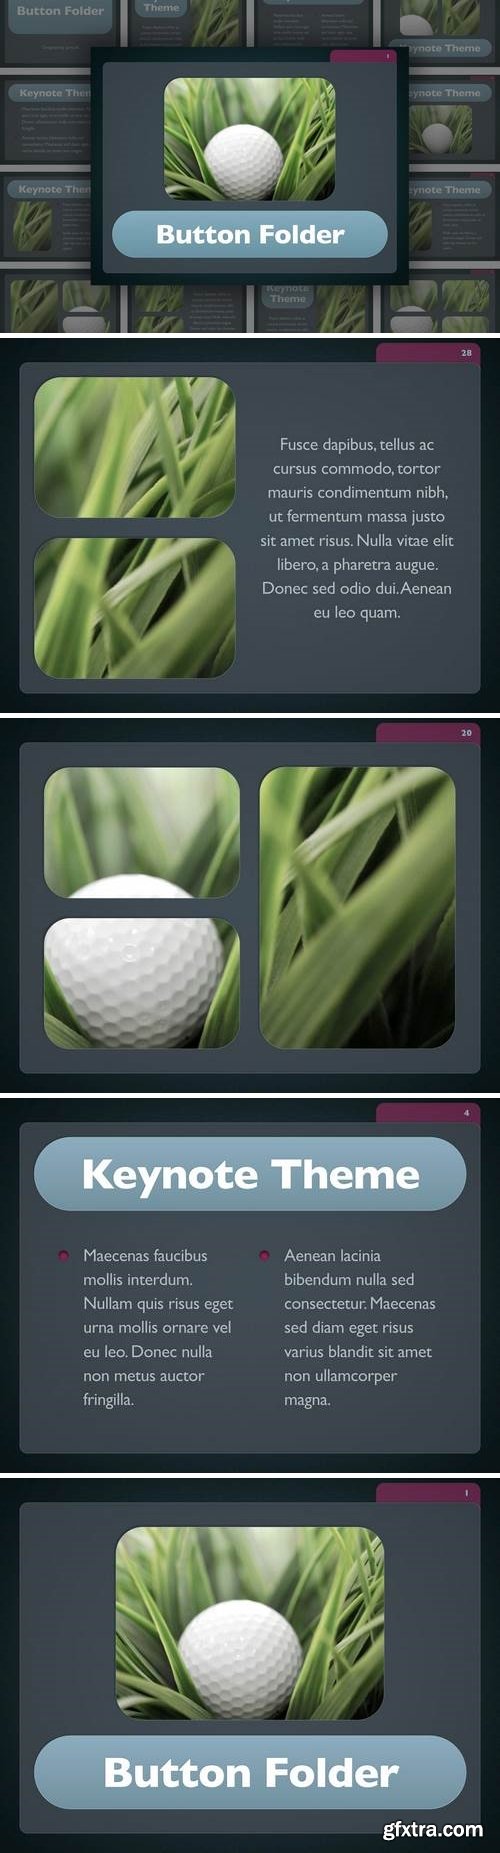 Button Folder Keynote Template